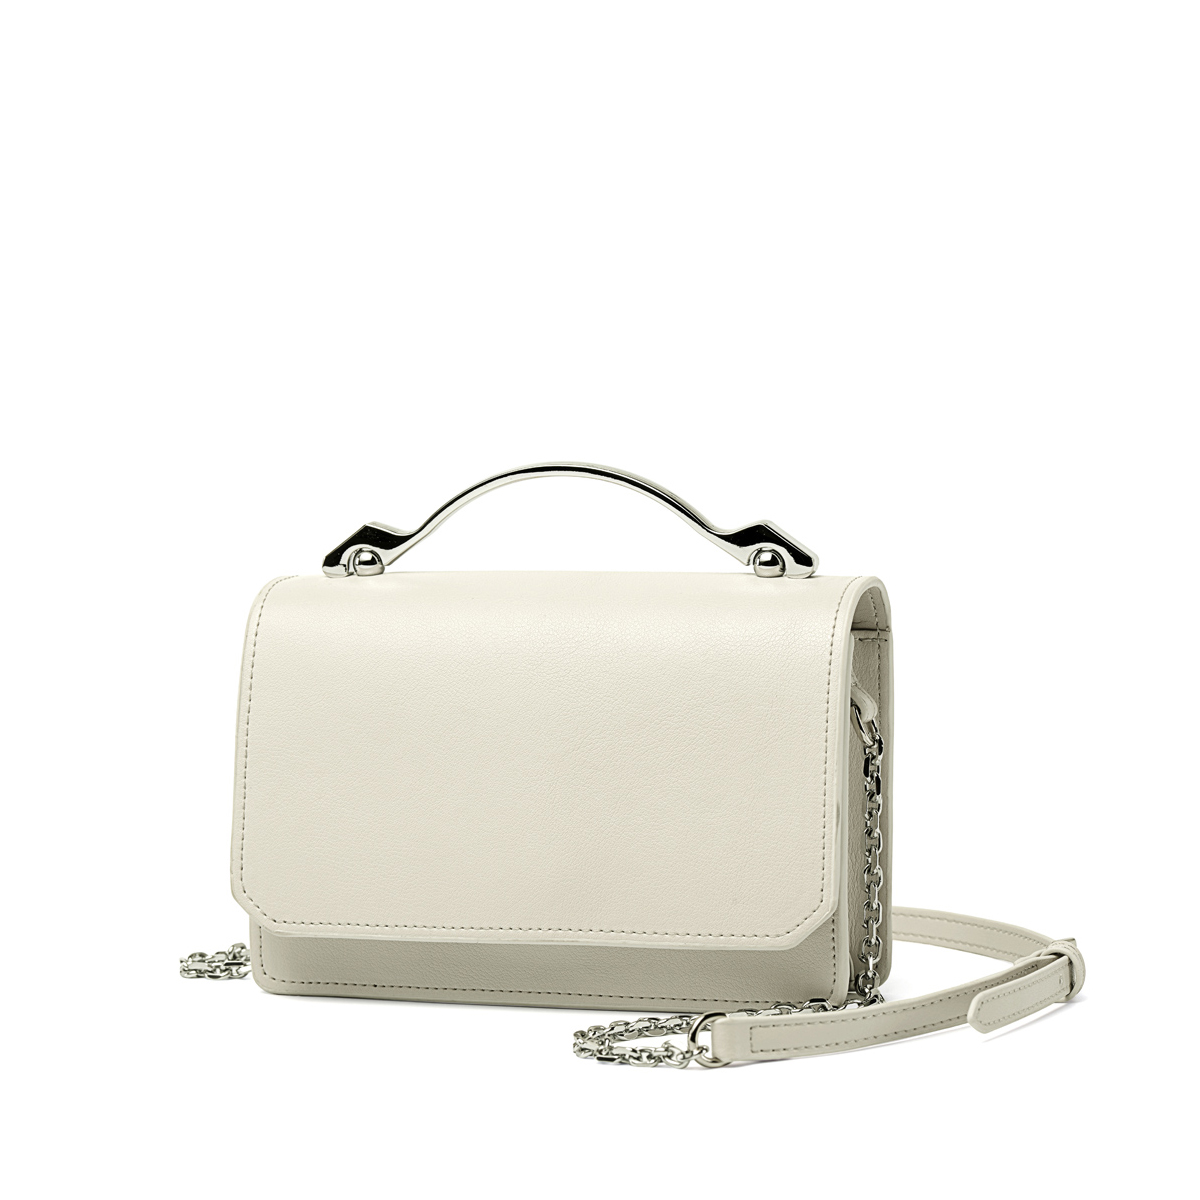 159bag:Wild Lady Handbags Lightweight Cute Female Shoulder Bags High Quality Small Square Crossbody 